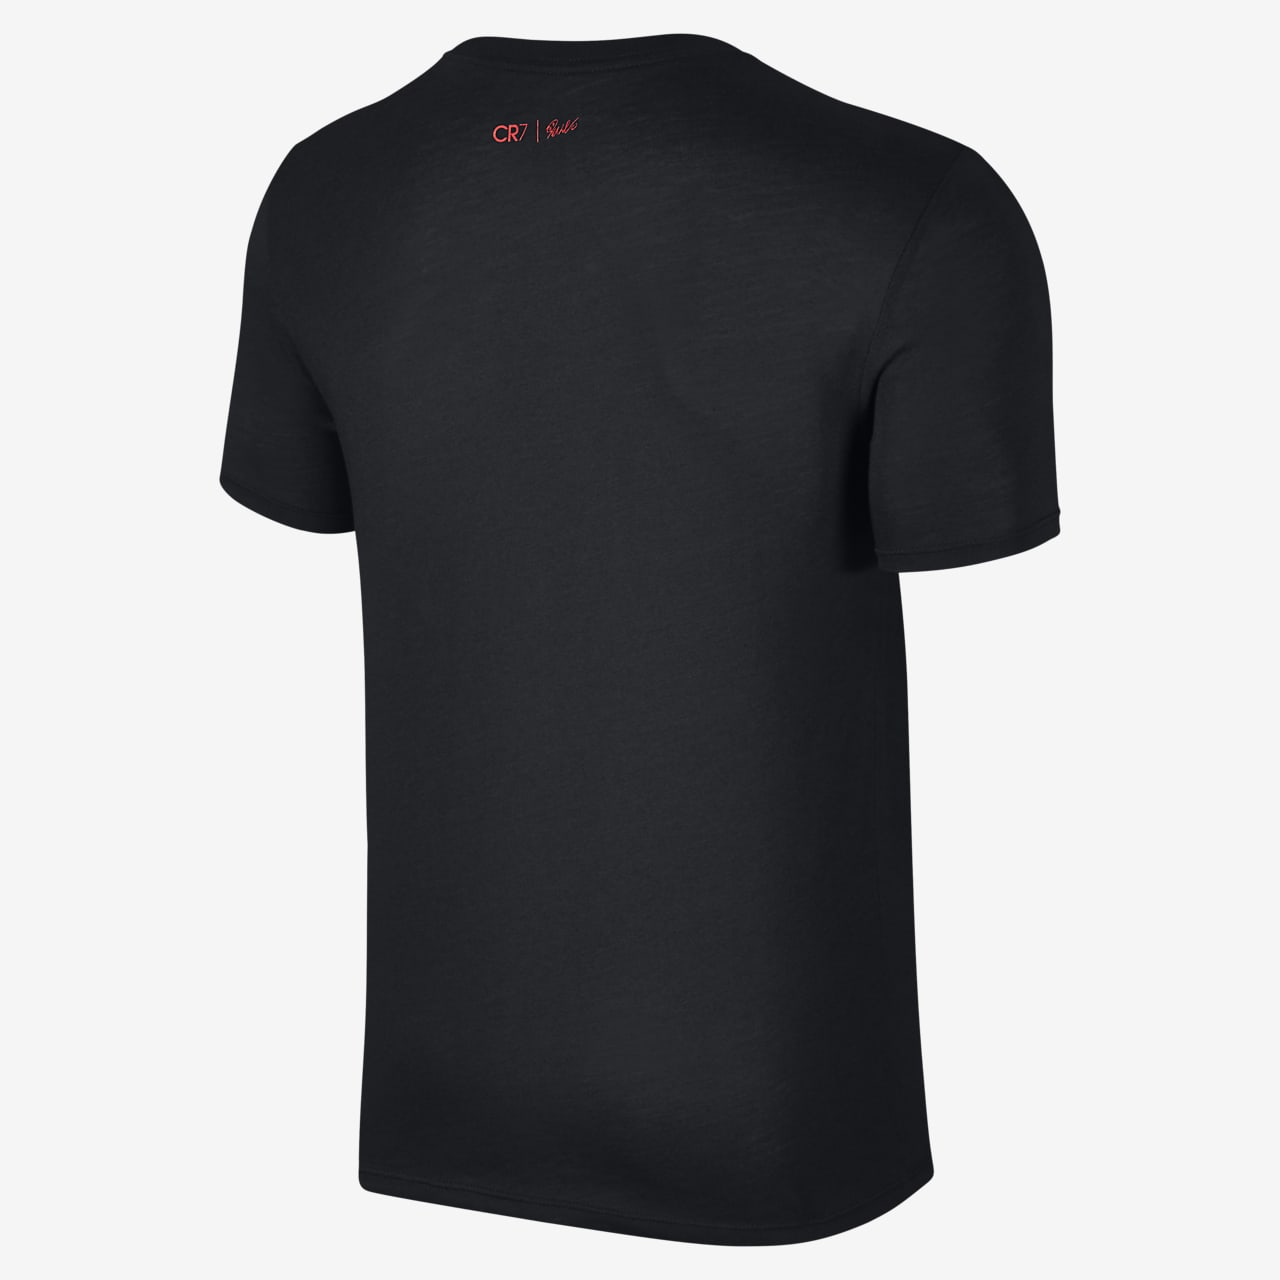 Nike CR7 Men's Football T-Shirt.